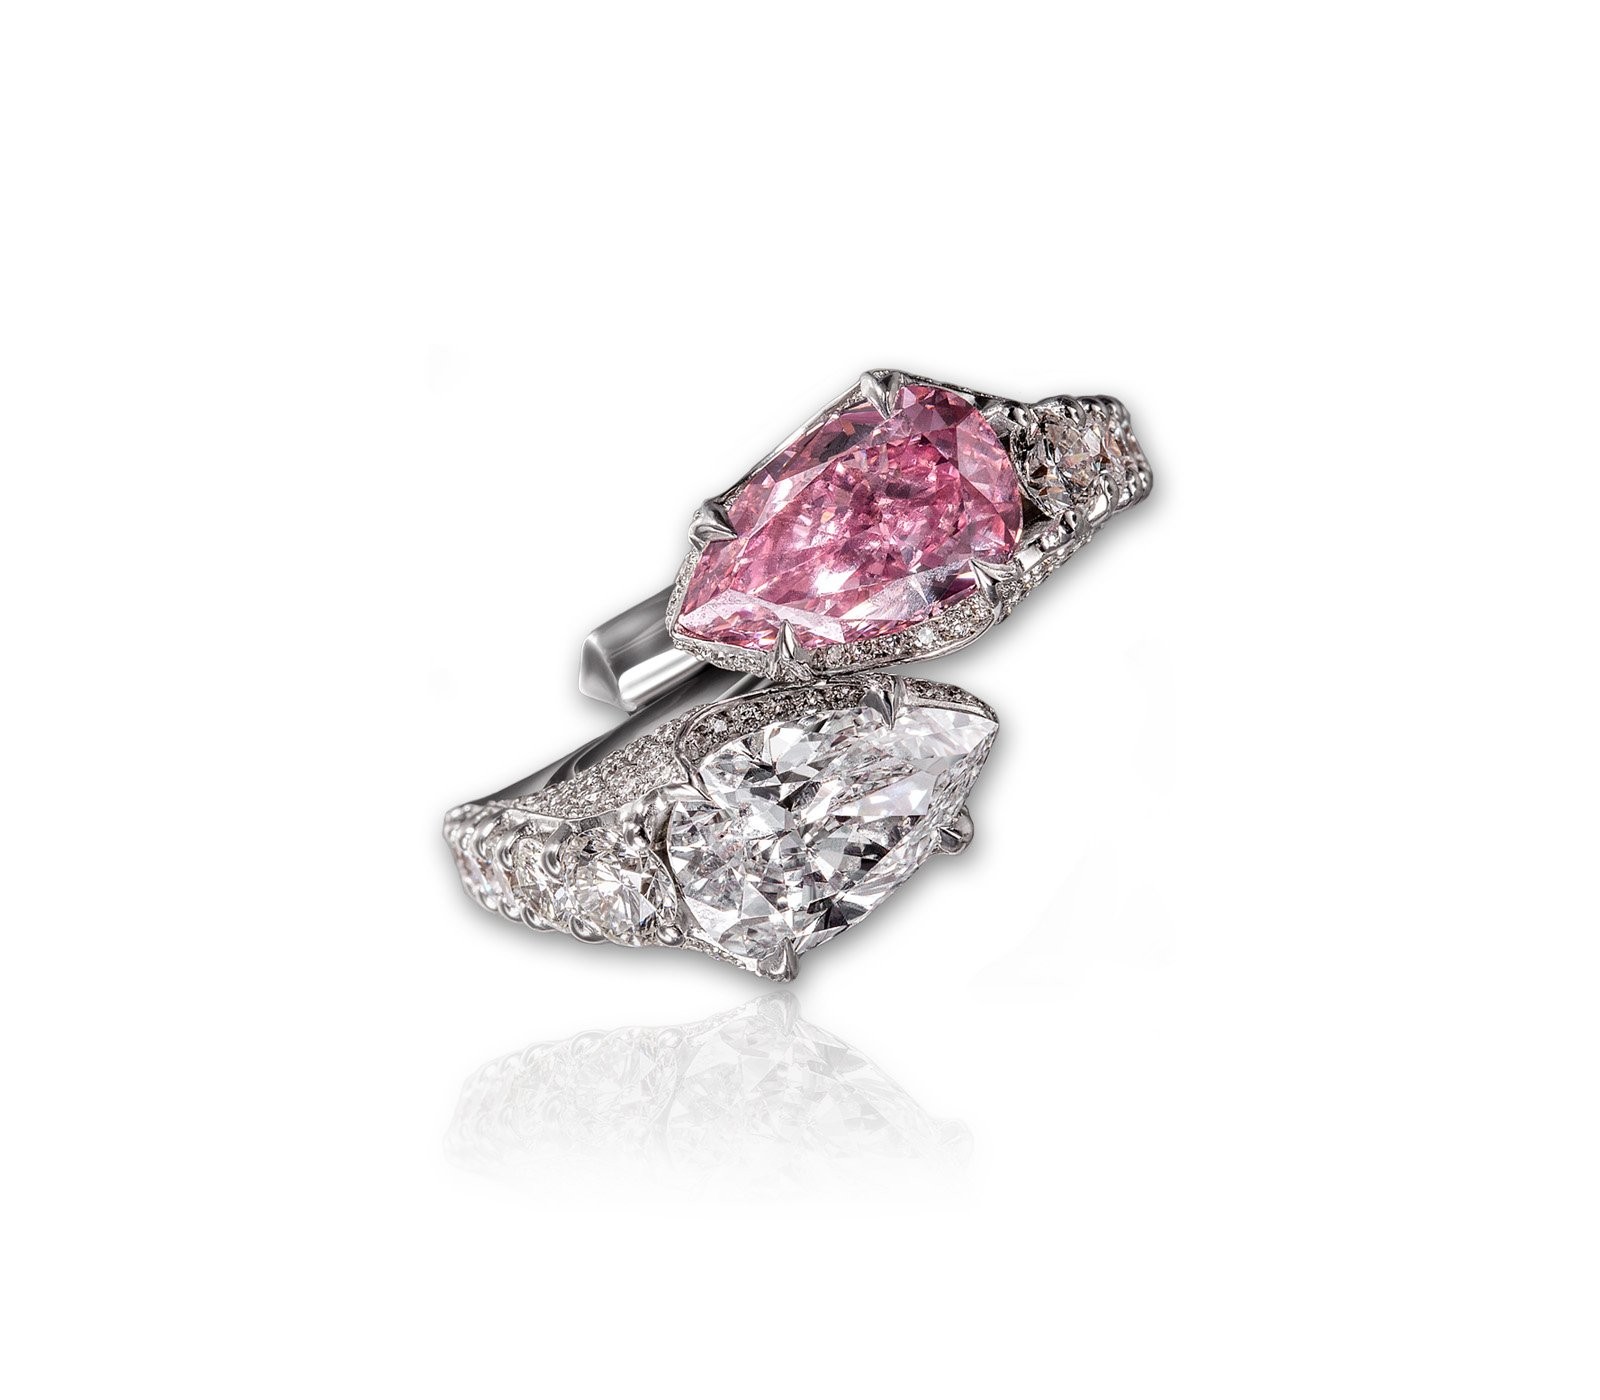 1576394790-pink-and-white-diamond-ring.jpg